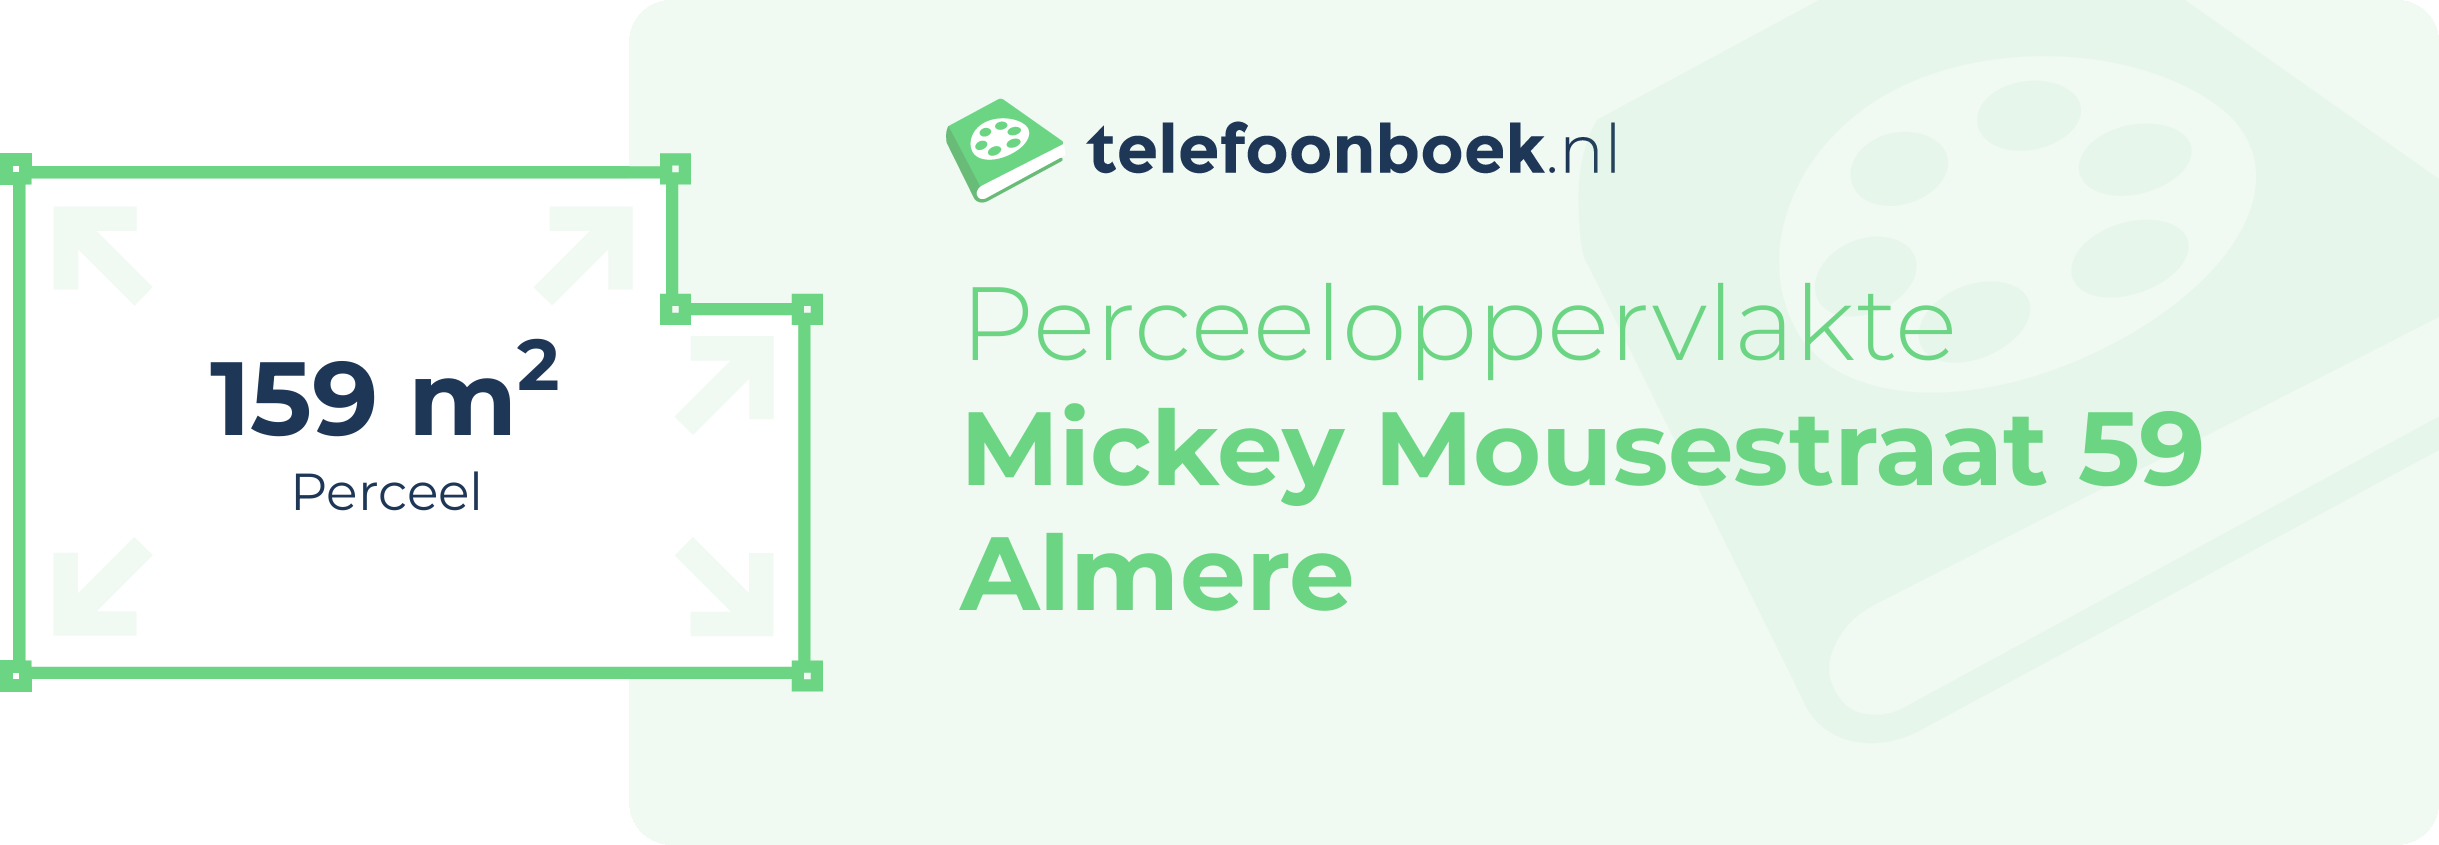 Perceeloppervlakte Mickey Mousestraat 59 Almere